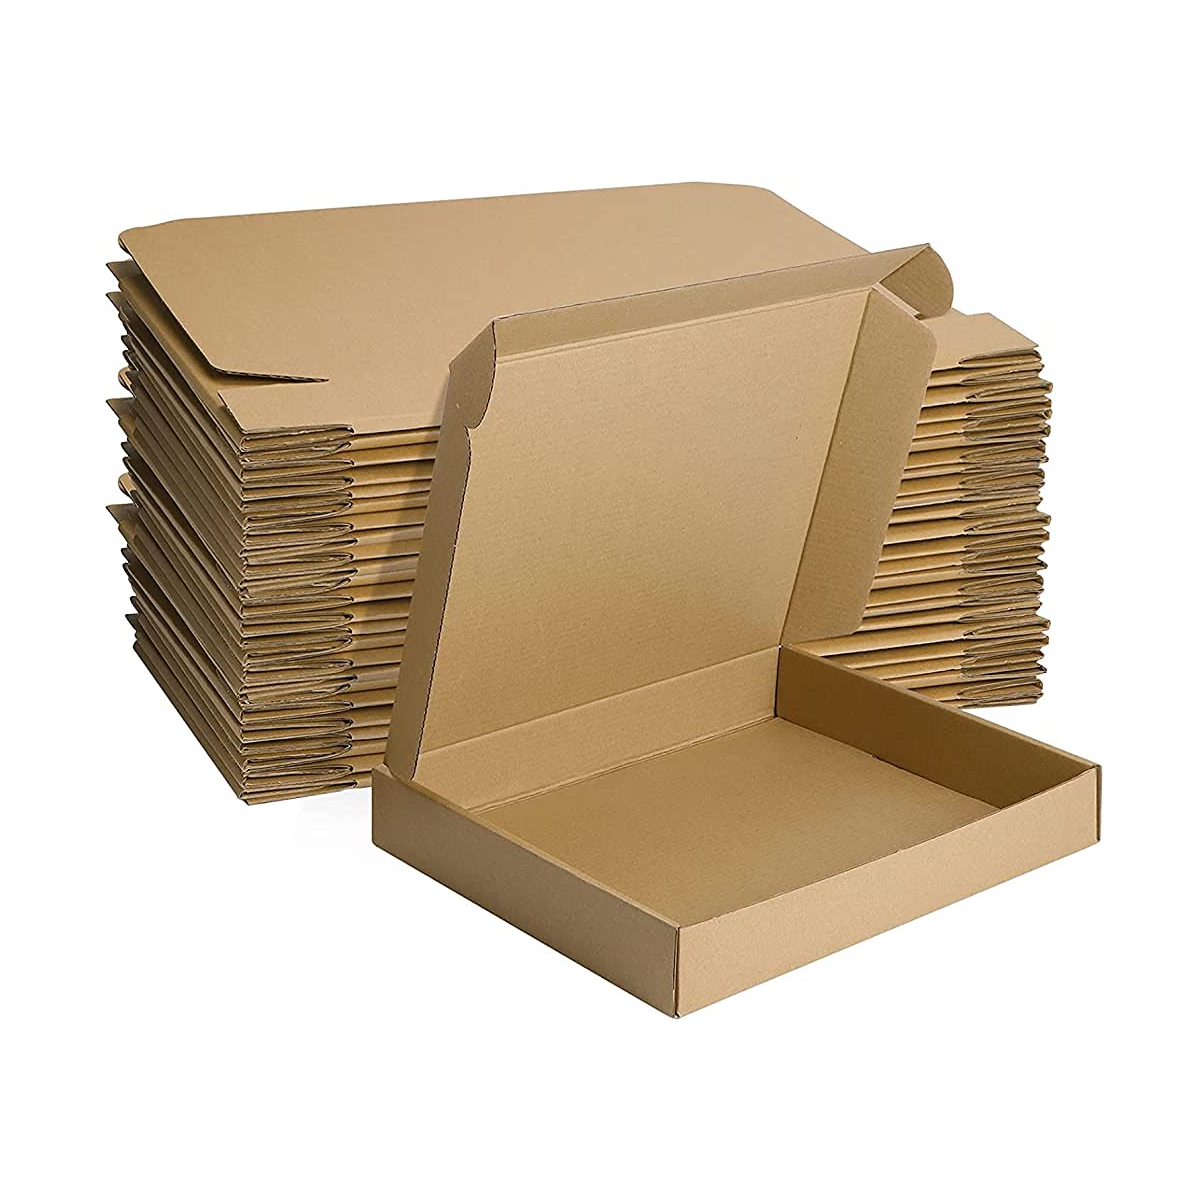 12 x 12 x 20 Corrugated Cardboard Boxes (Brown / Kraft) - Sandbaggy